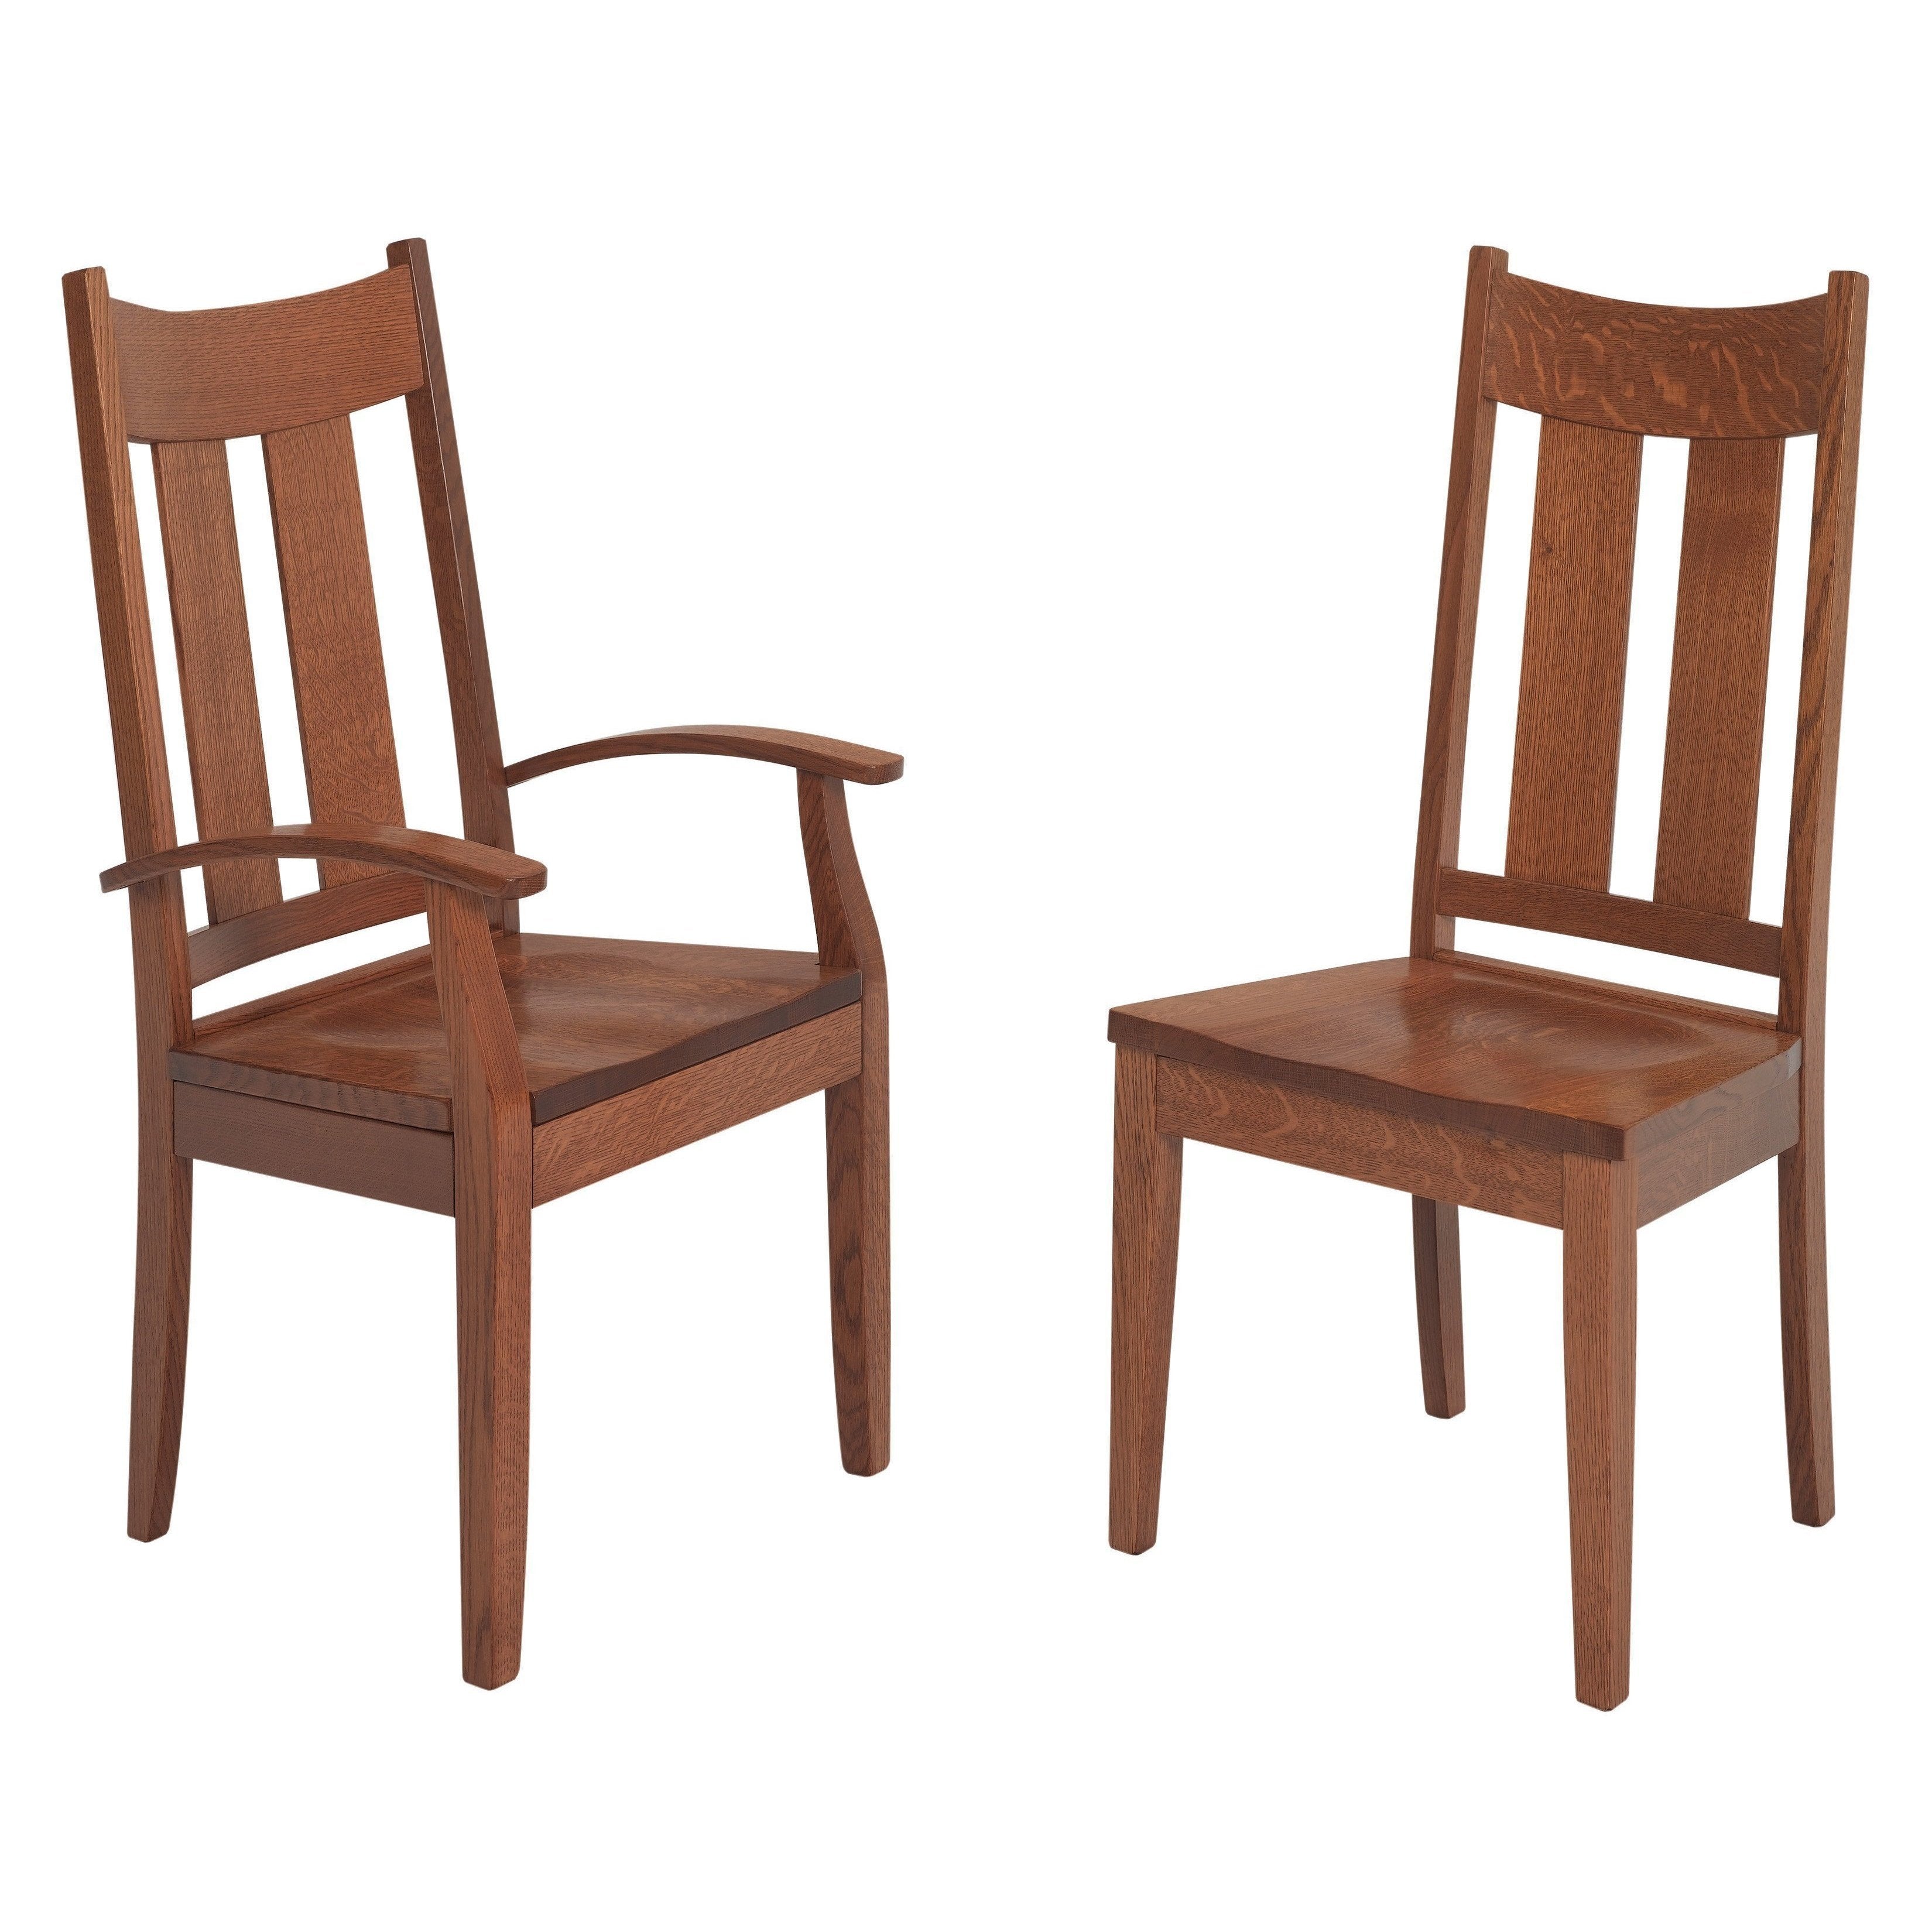 aspen-chairs-260016.jpg